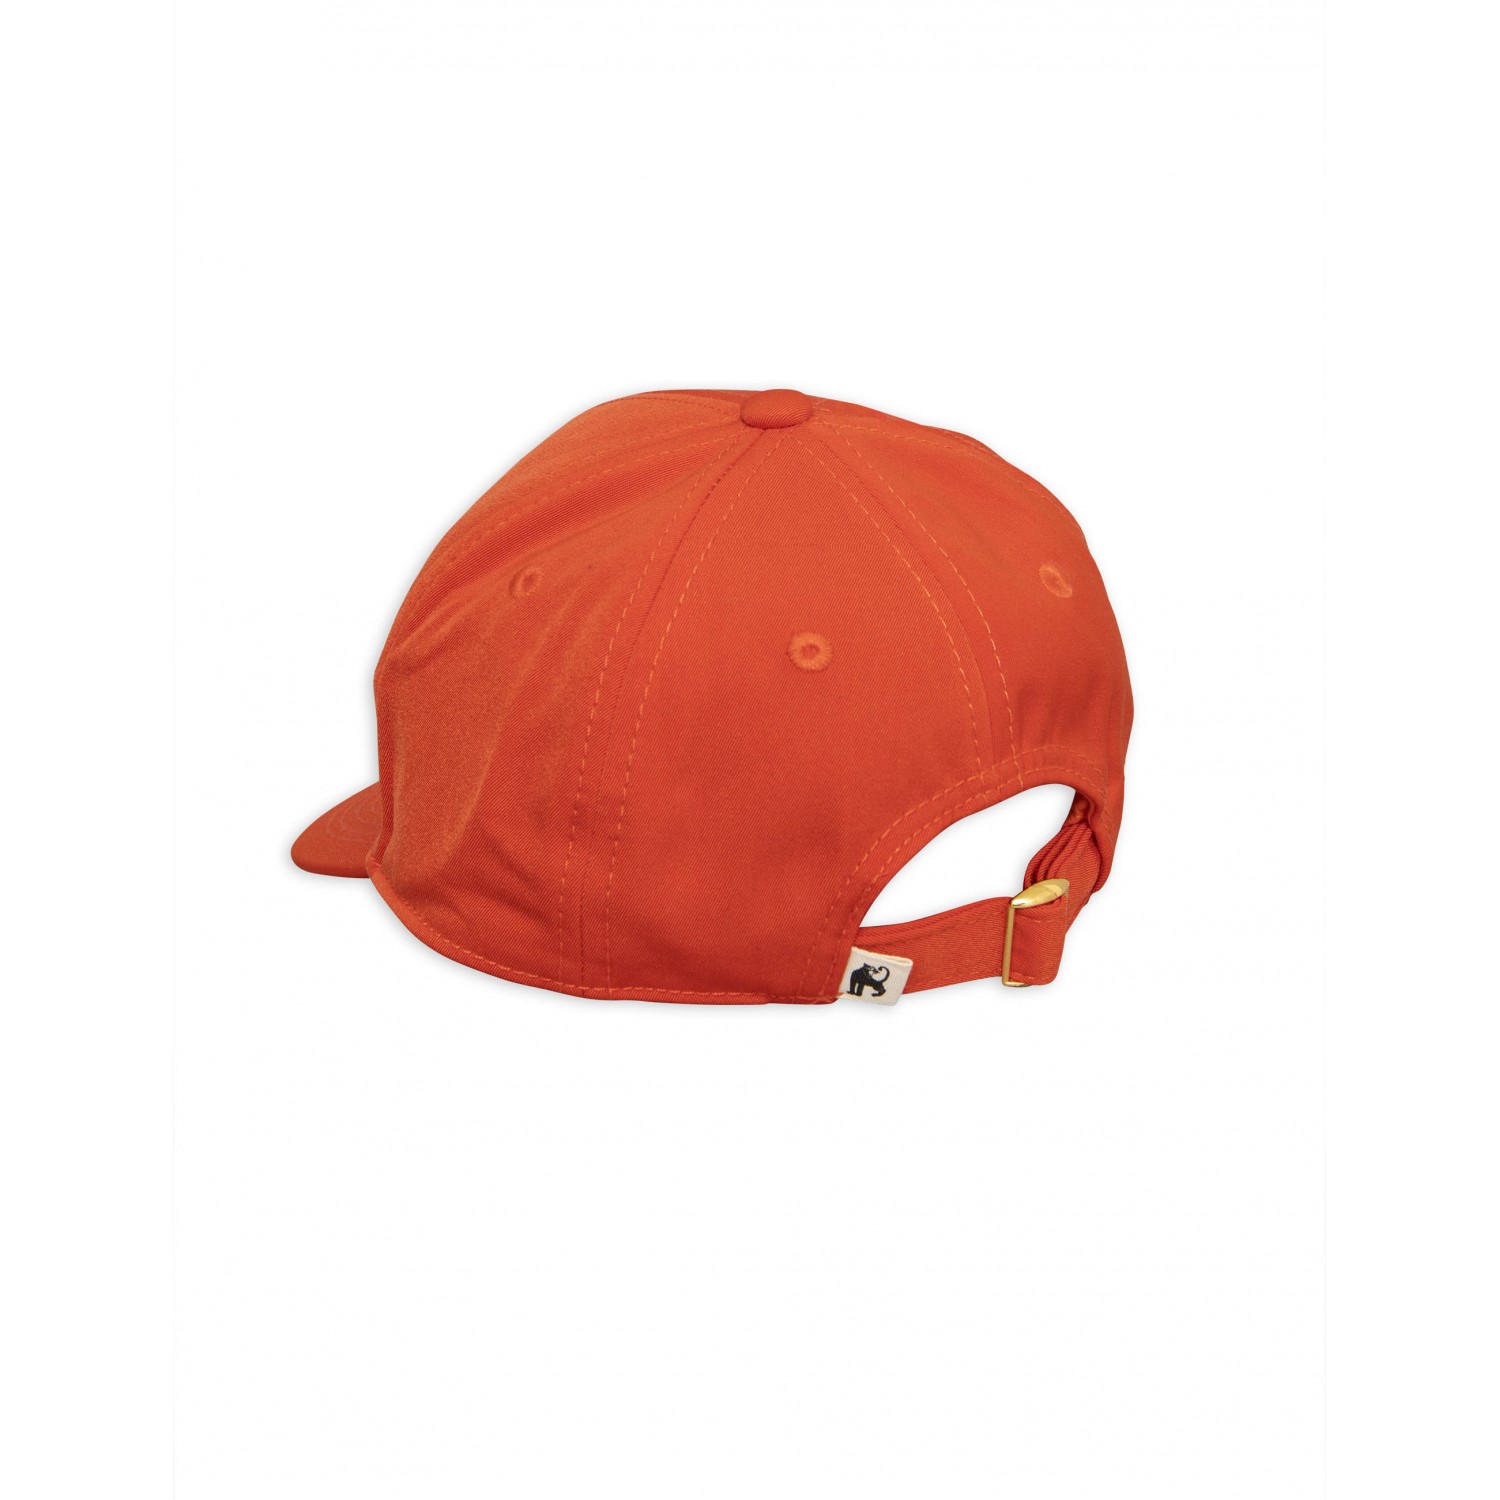 BANANA TRUCKER CAP RED